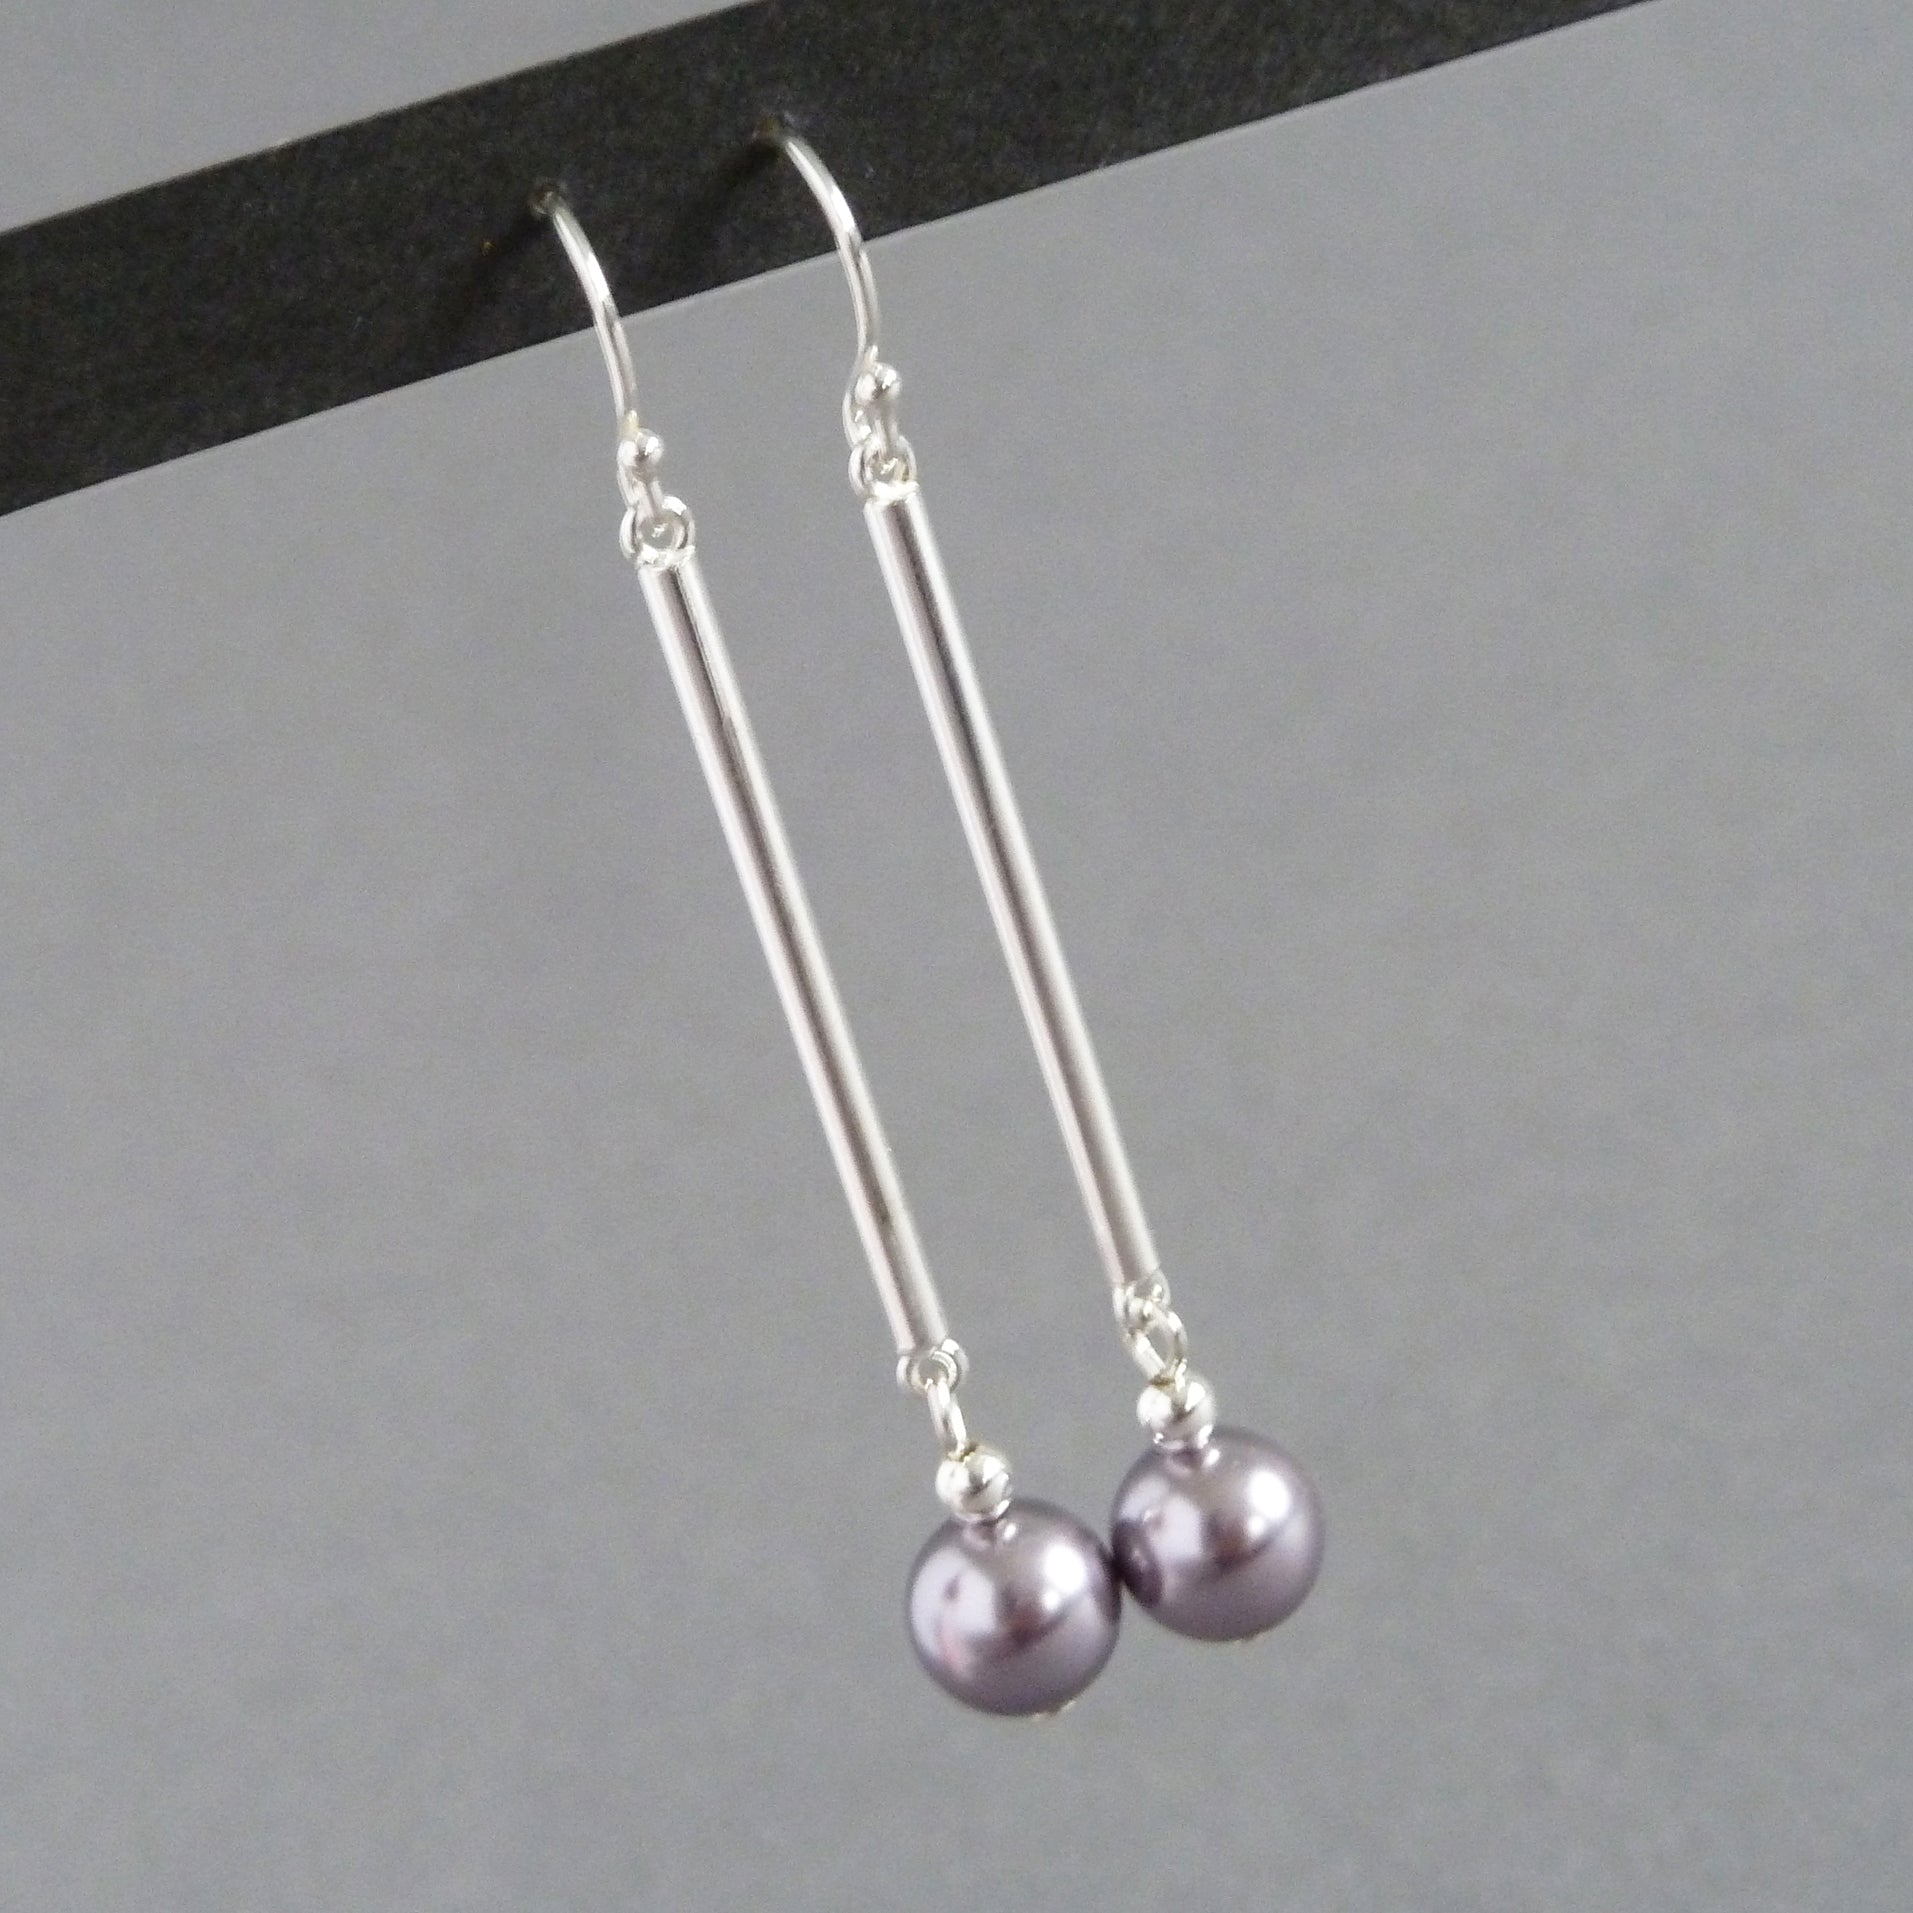 Lilac pearl drop earrings